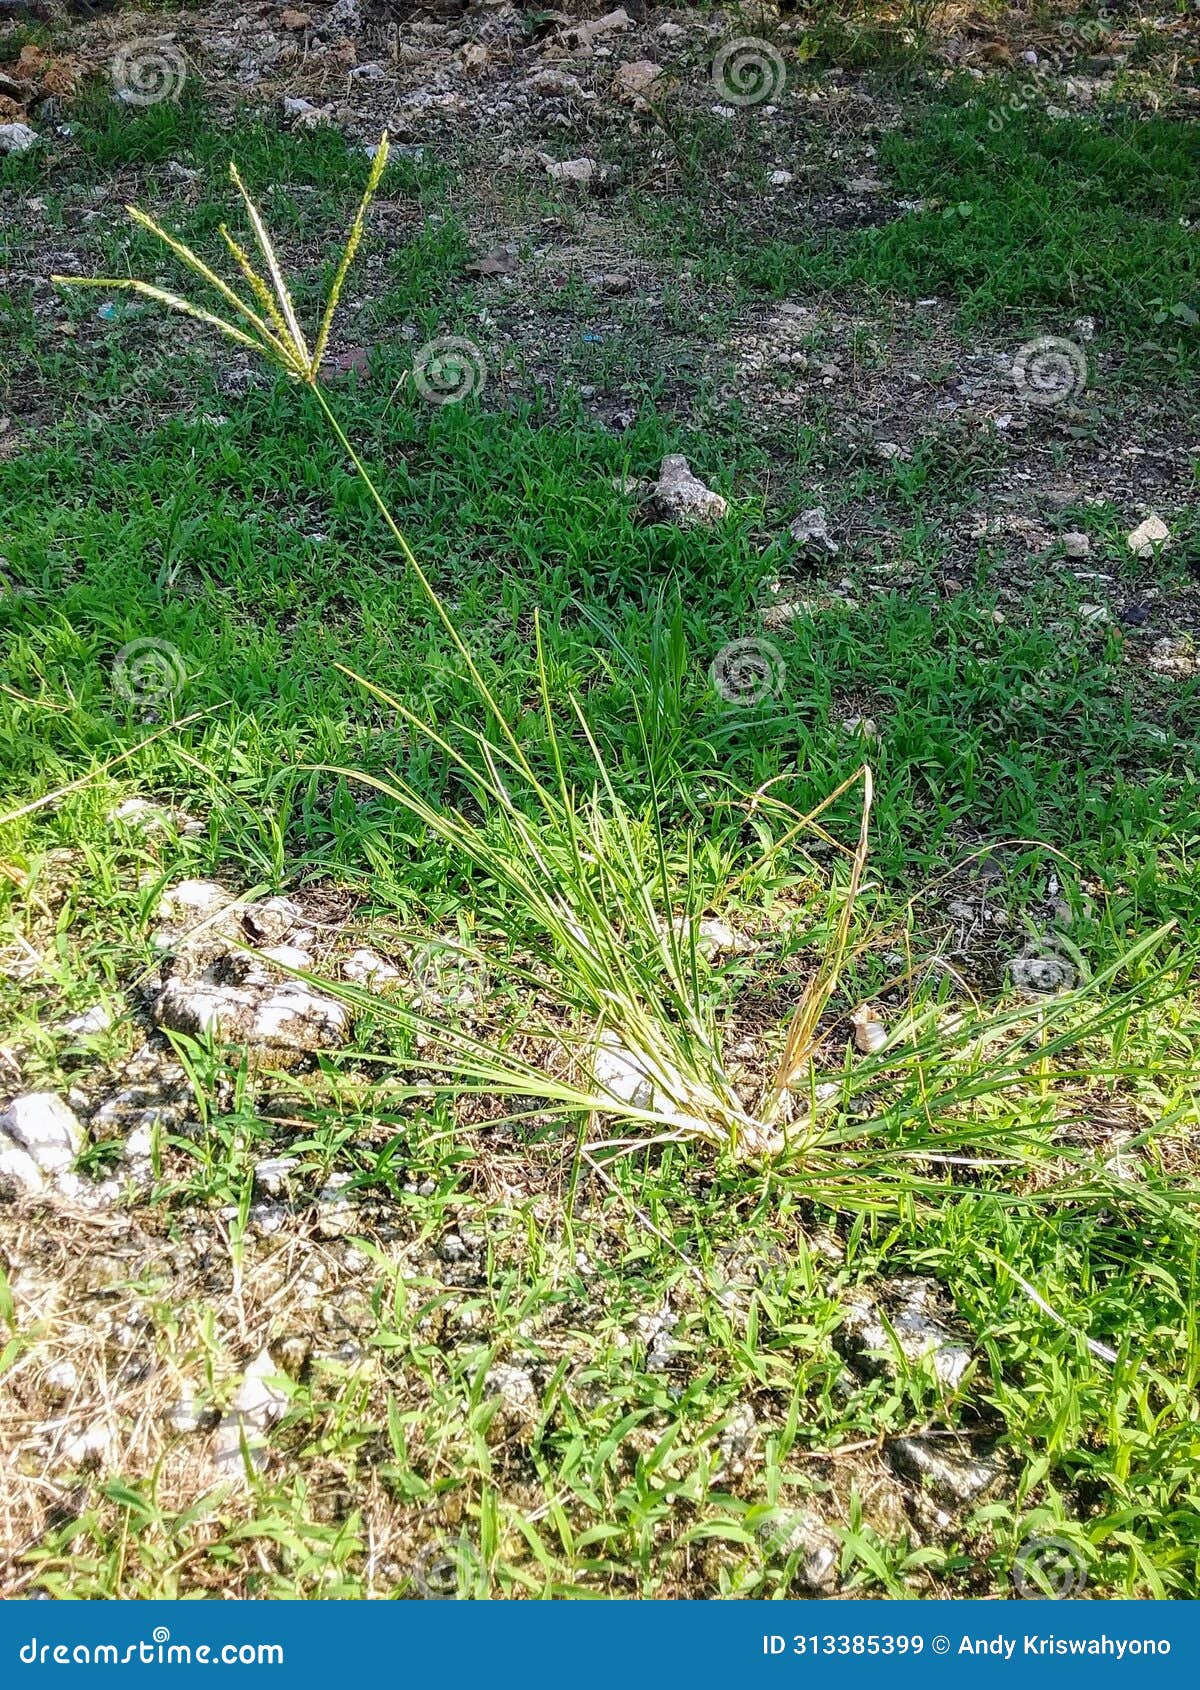 lulangan grass grows taller than the surrounding grass.